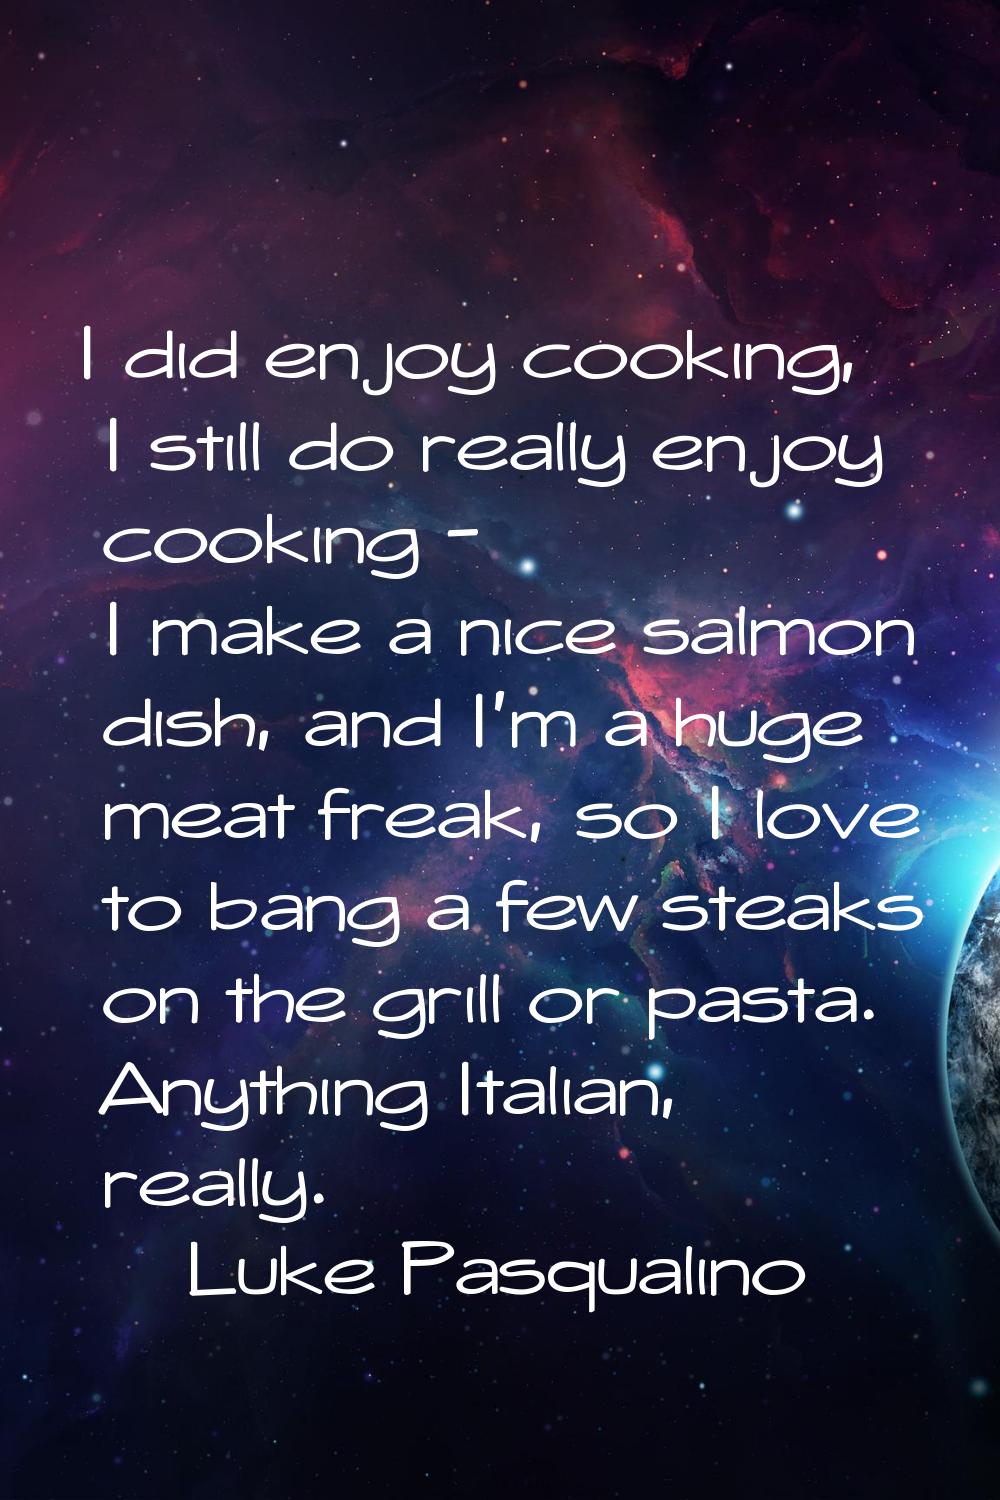 I did enjoy cooking, I still do really enjoy cooking - I make a nice salmon dish, and I'm a huge me